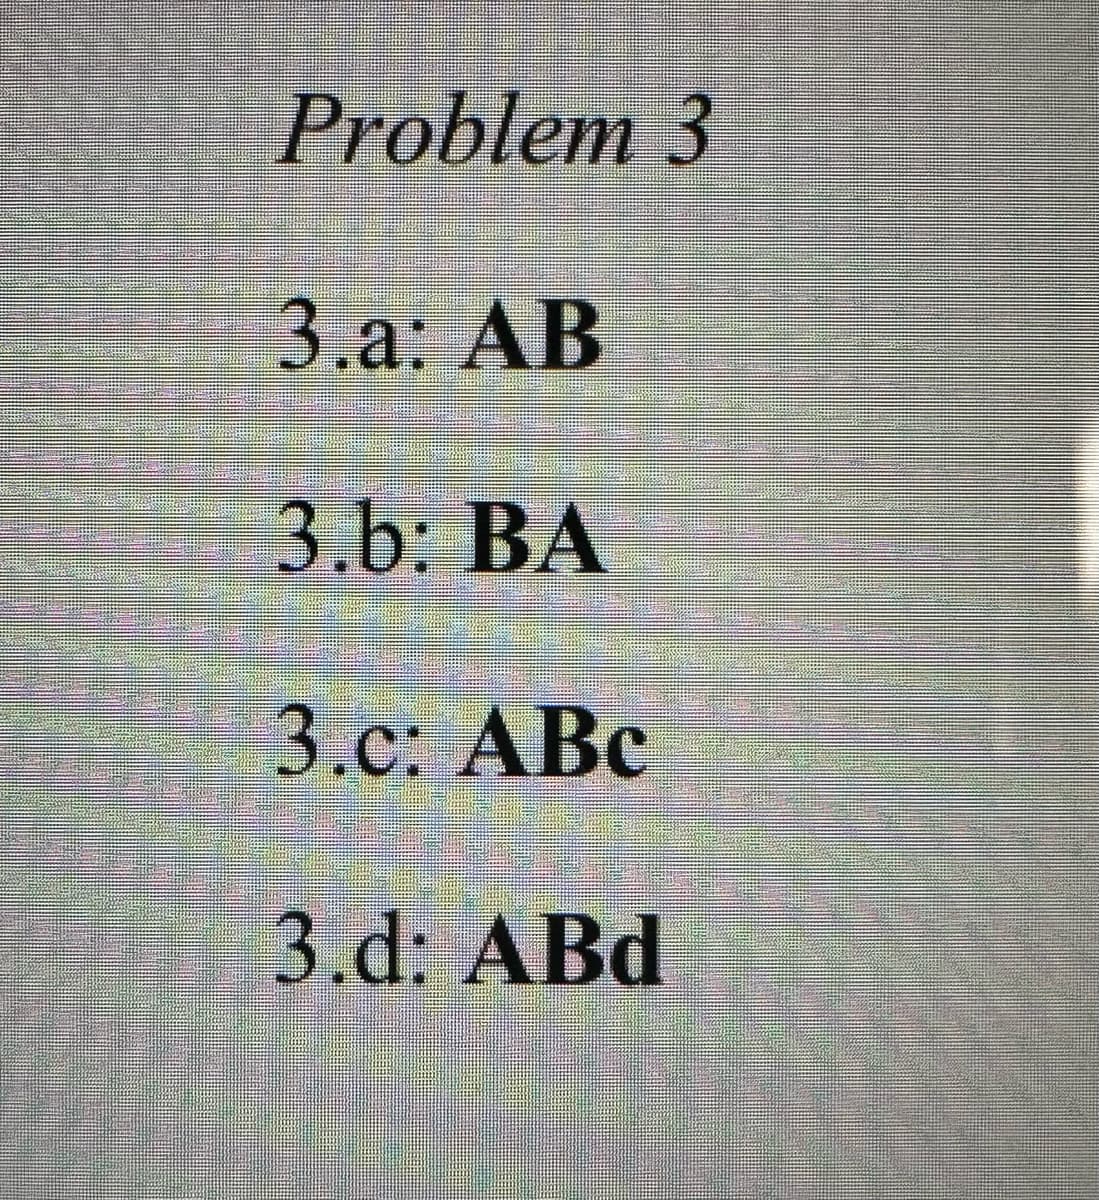 Problem 3
3.a: AB
3.b: BA
3.c: ABC
E
3.d: ABd